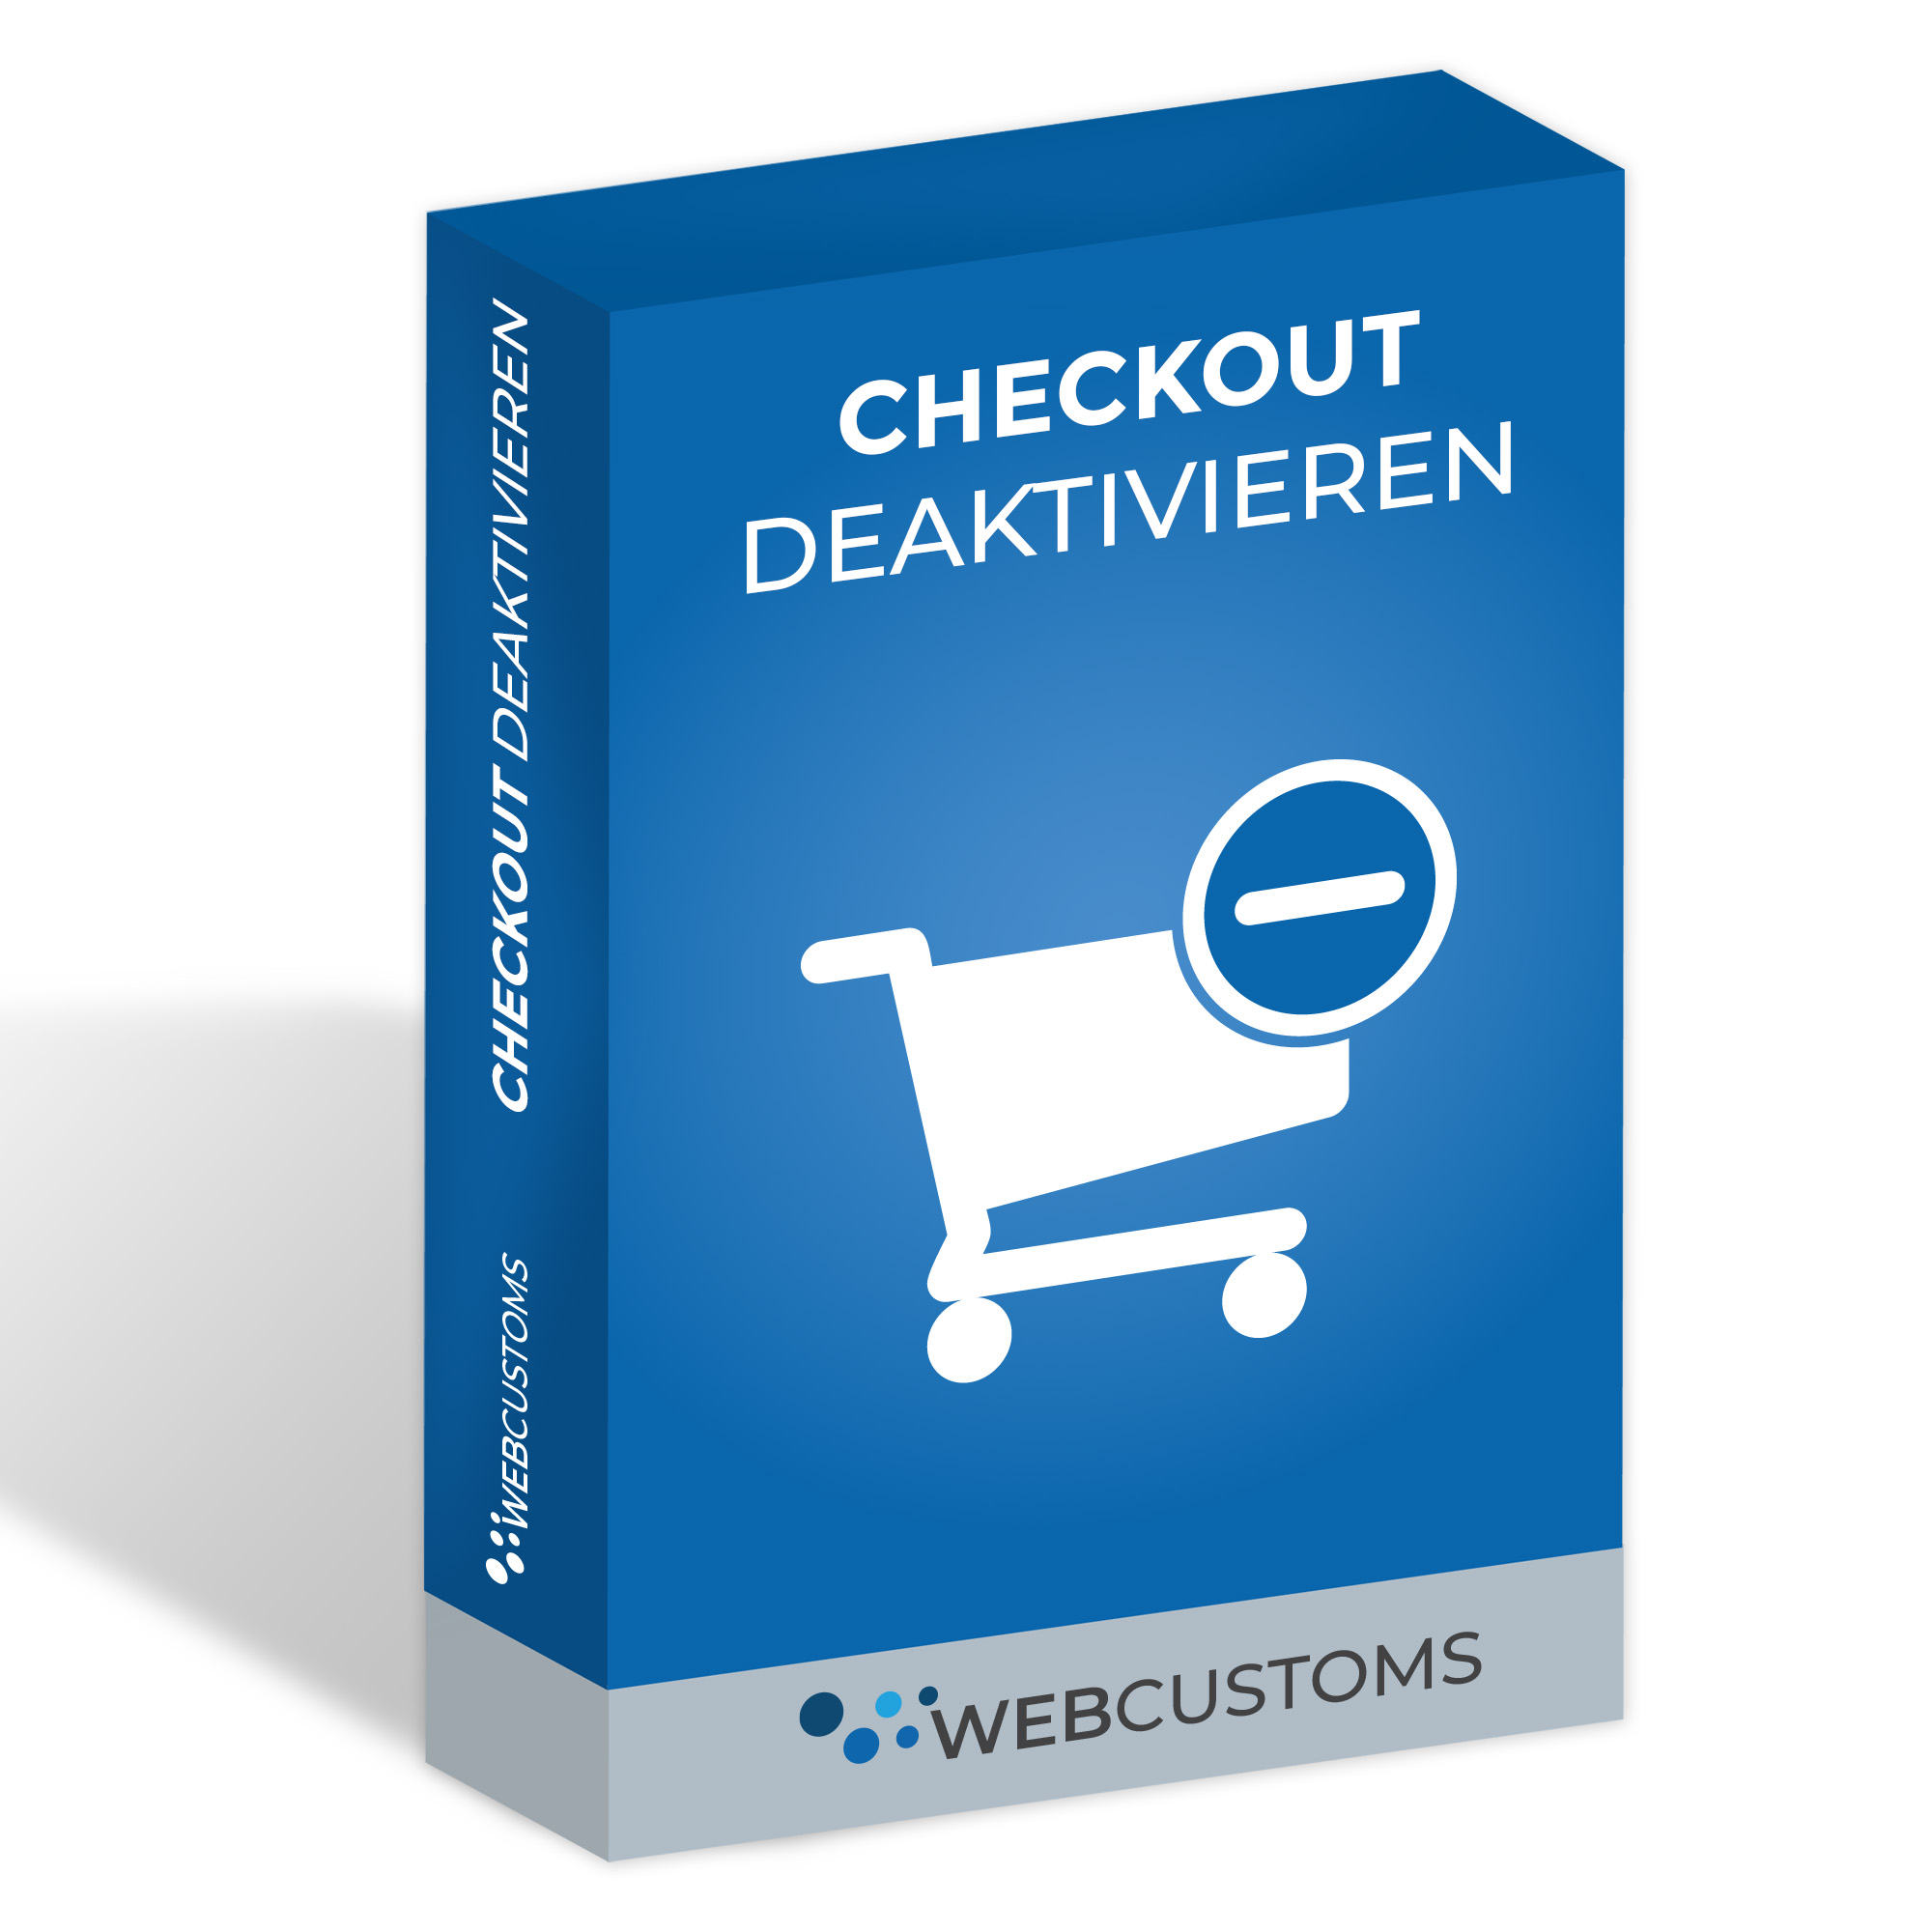 Shopware Plugin - Checkout deaktivieren